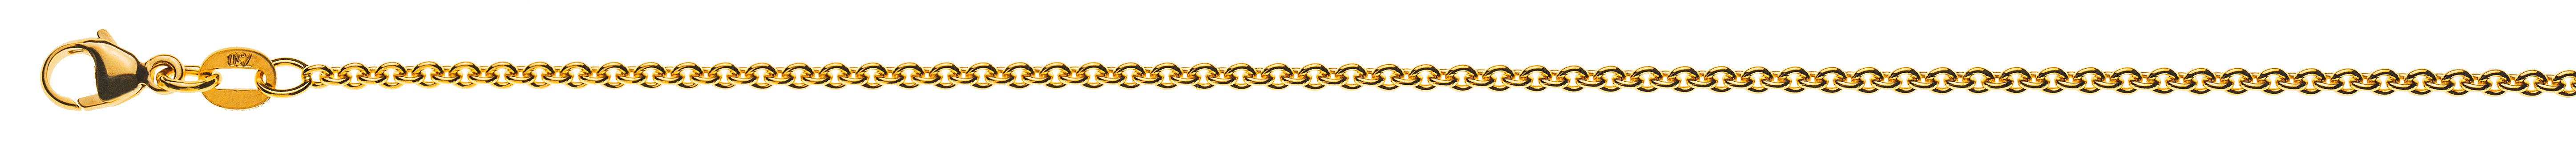 AURONOS Prestige Necklace Yellow Gold 18K Round Anchor 40cm 1.9mm